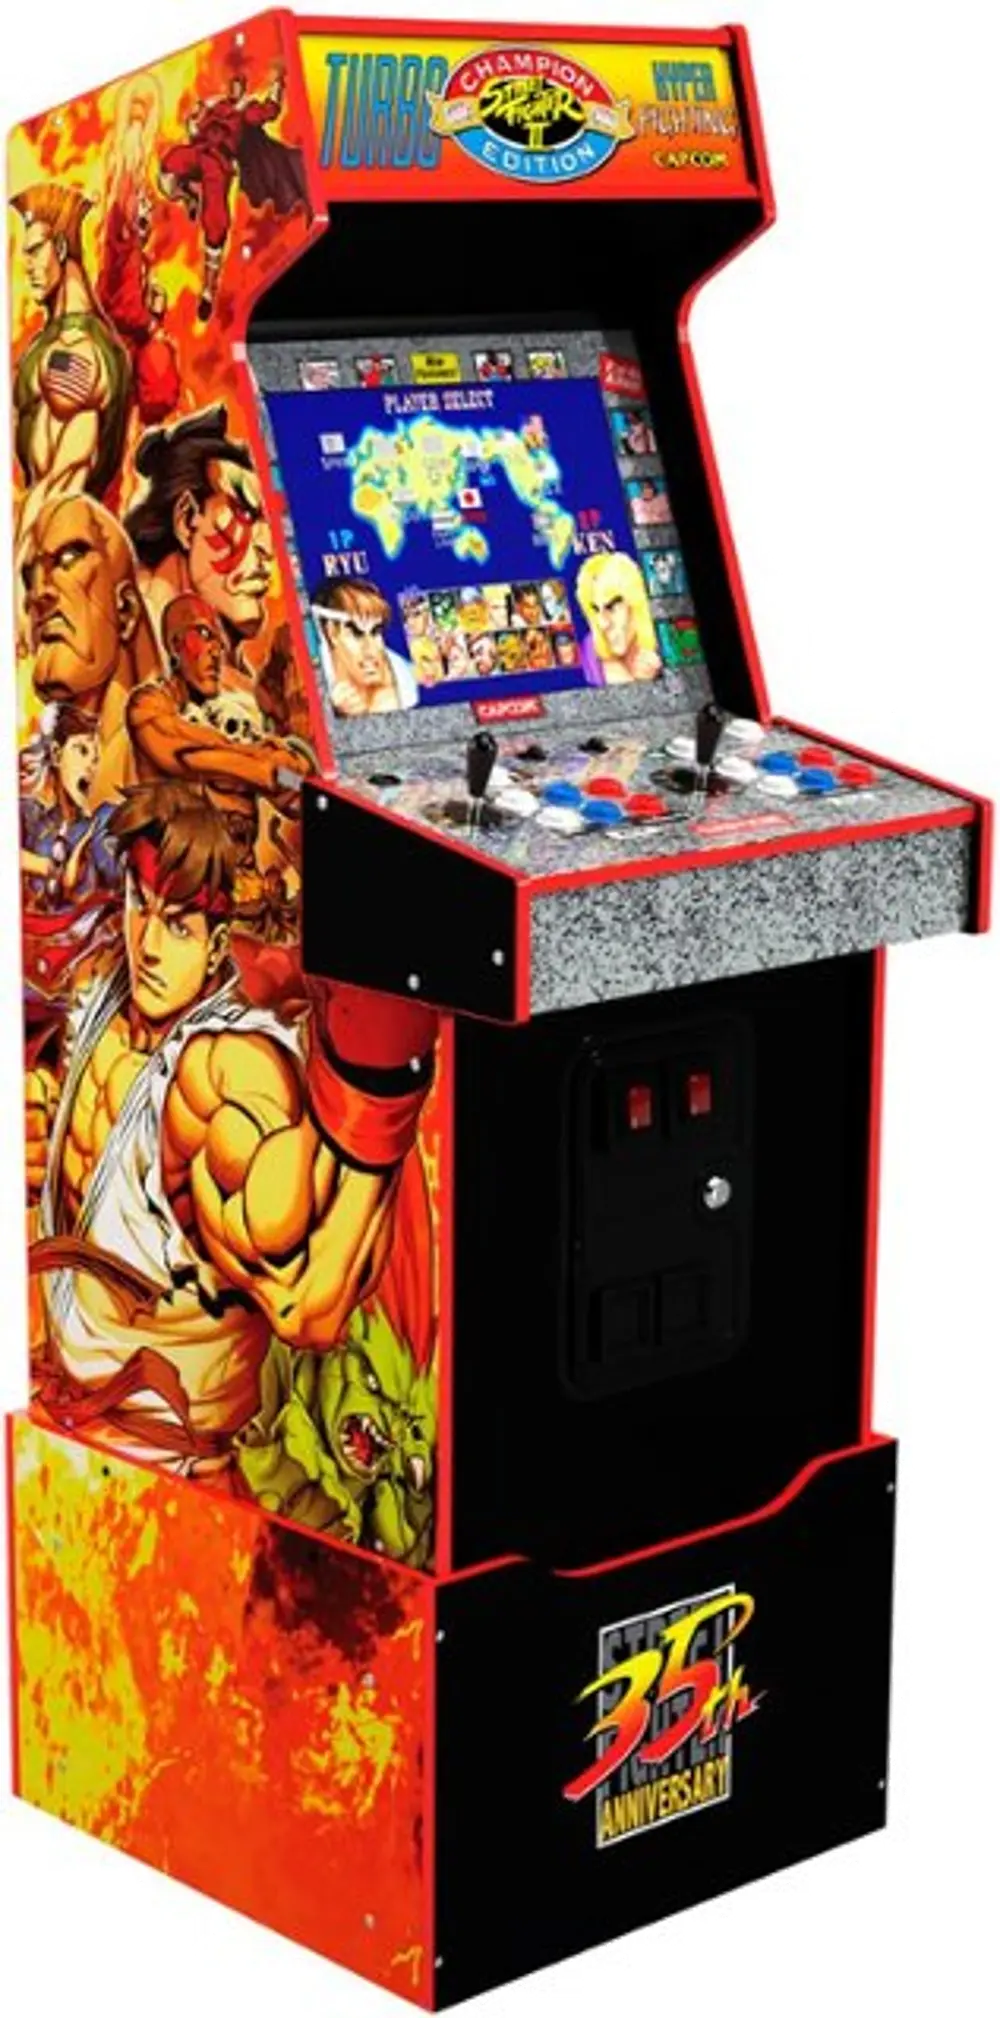 UPRIGHT/SFII_TURBO Arcade1Up Capcom Street Fighter II: Champion Turbo Legacy Edition with Riser & Lit Marque Arcade-1